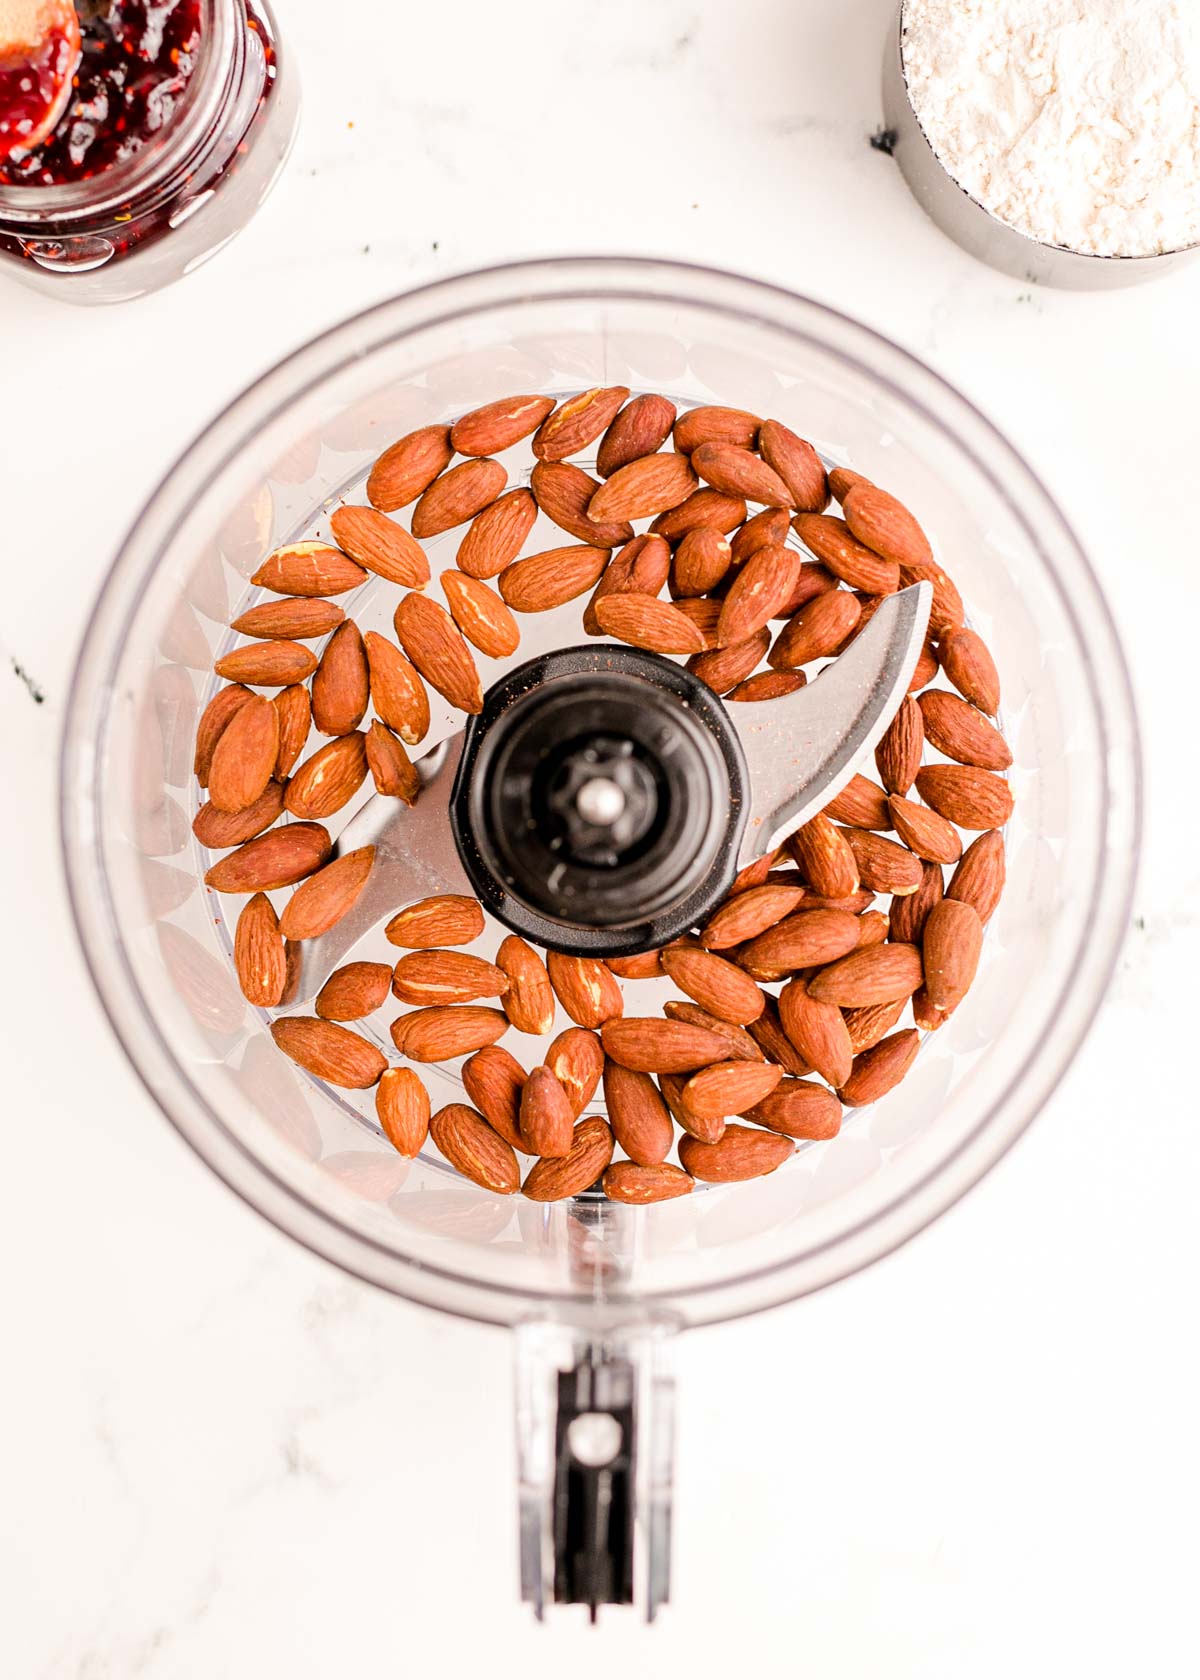 Almonds in a food processor.